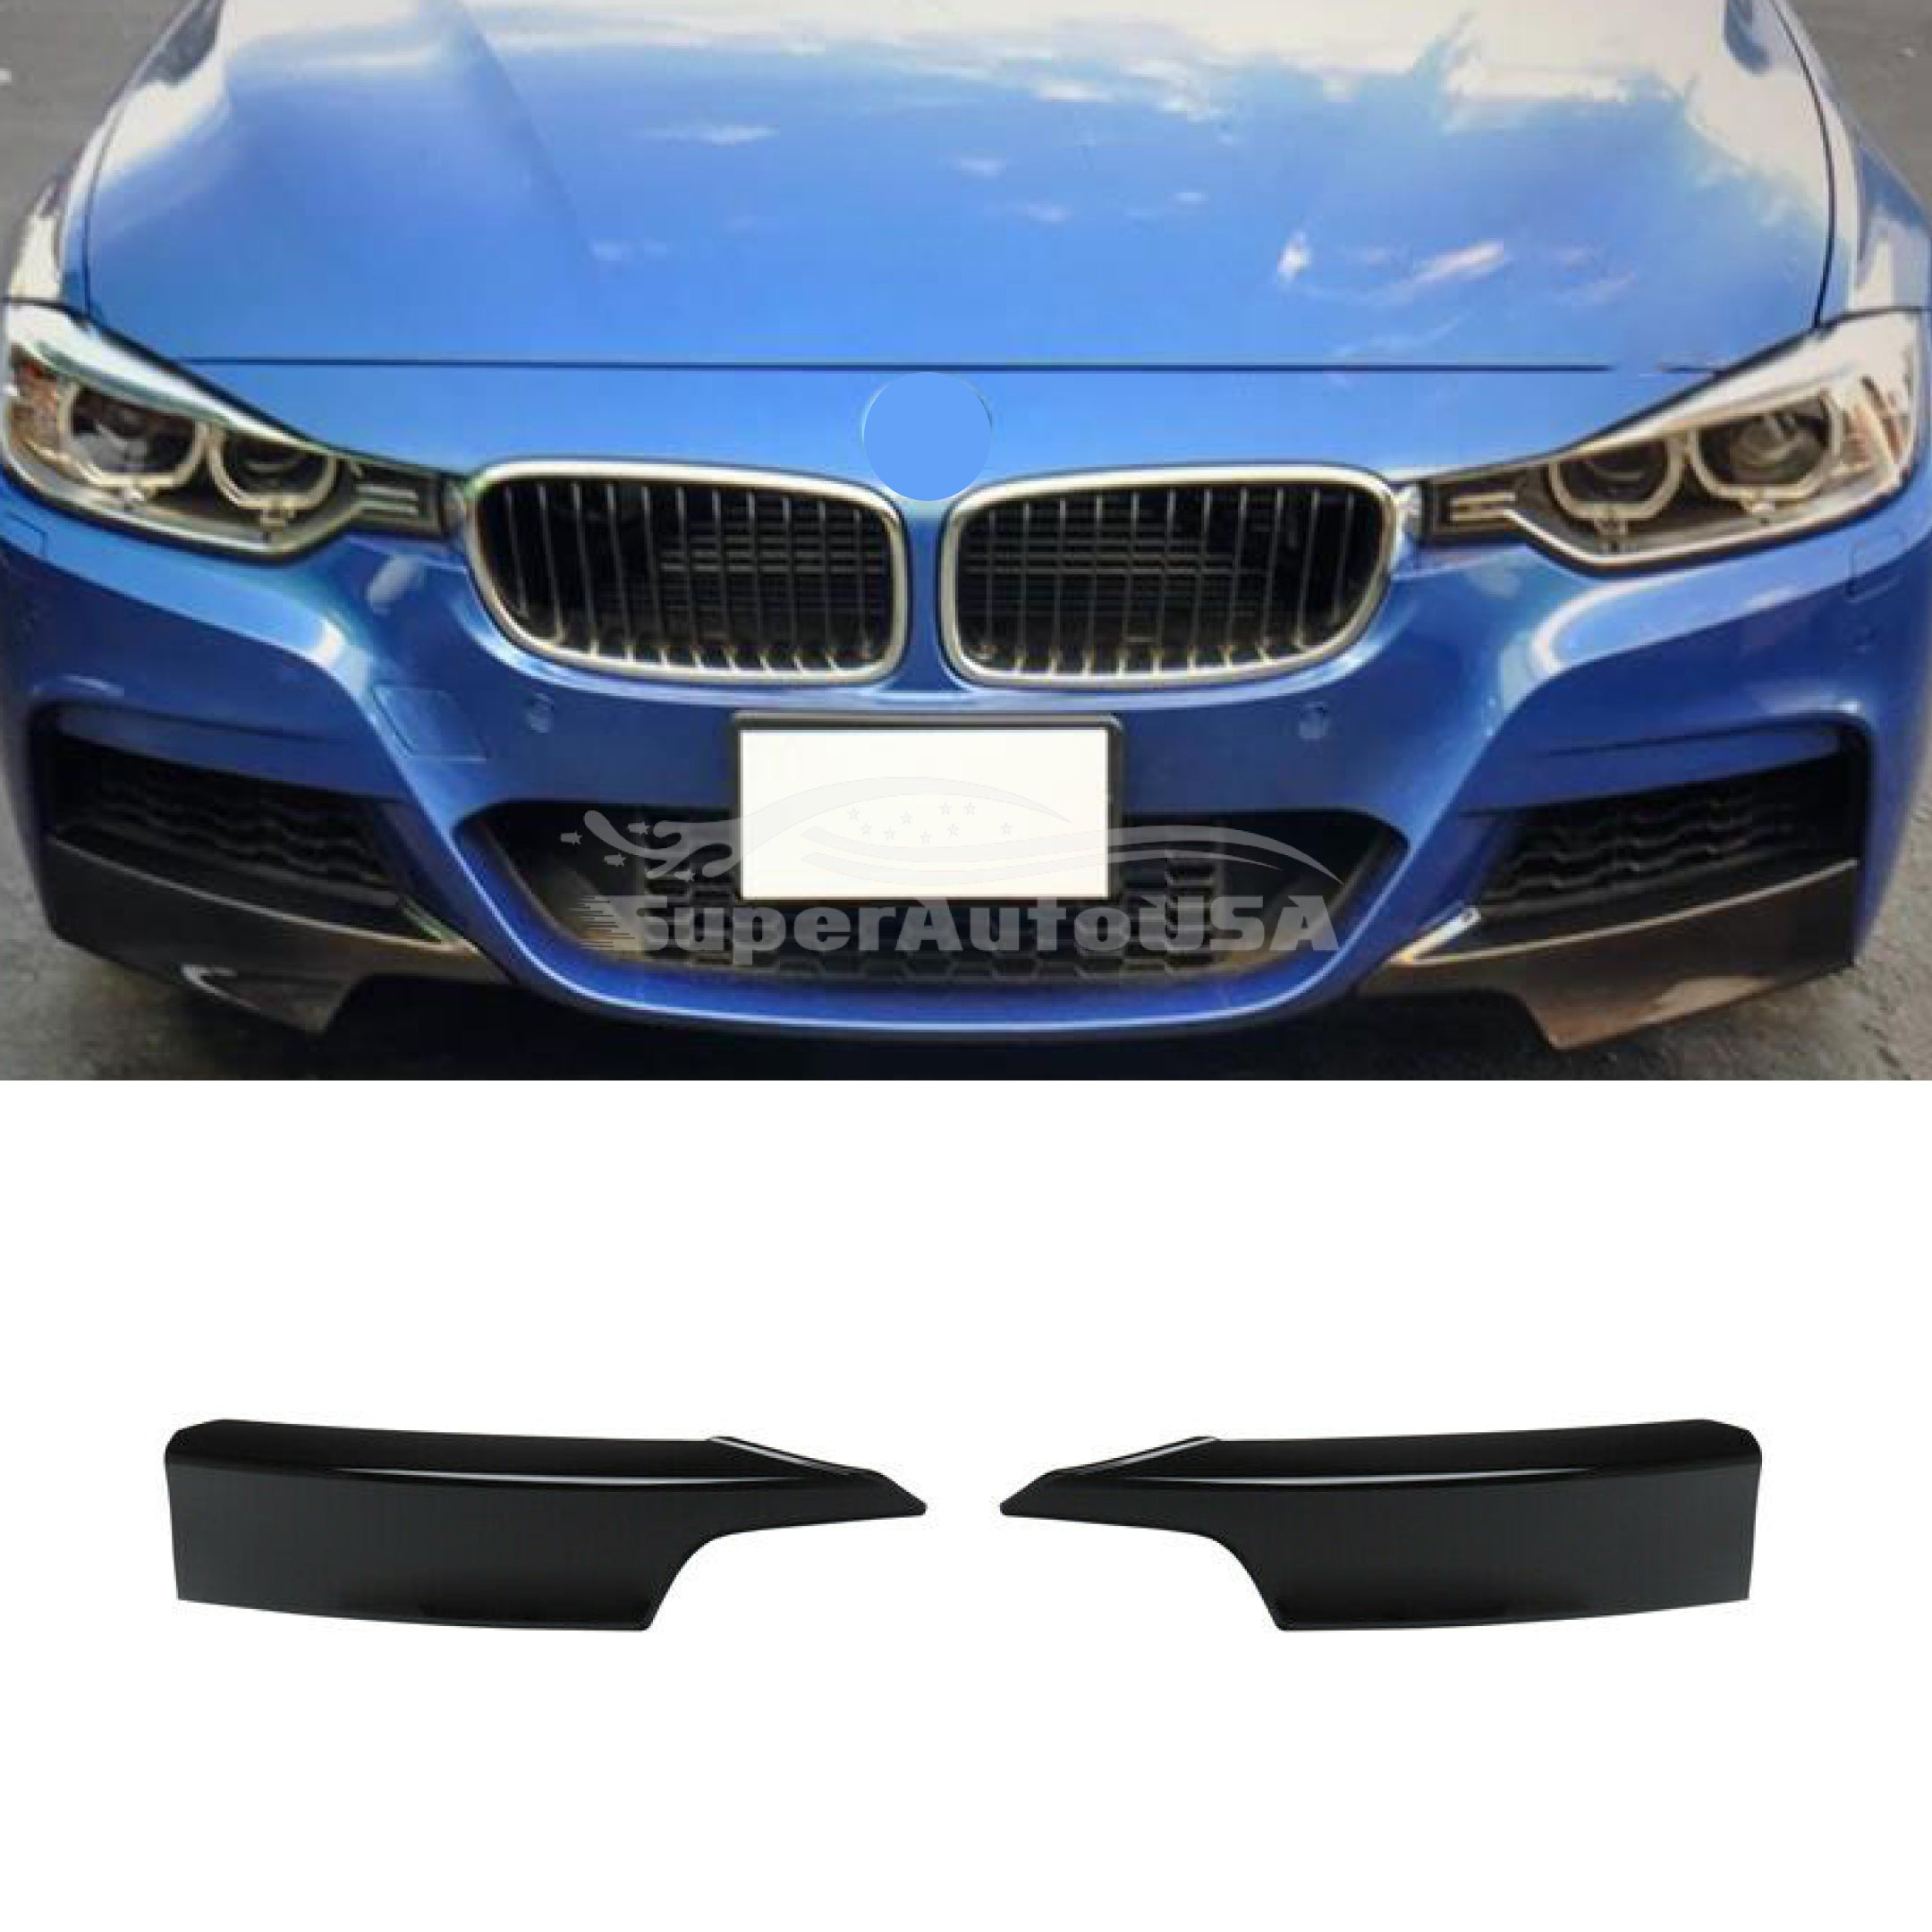 Compatible con divisores de esquina de labios de parachoques delantero BMW 3 Series F30 M Sport 2012-2018 (negro brillante) - 0